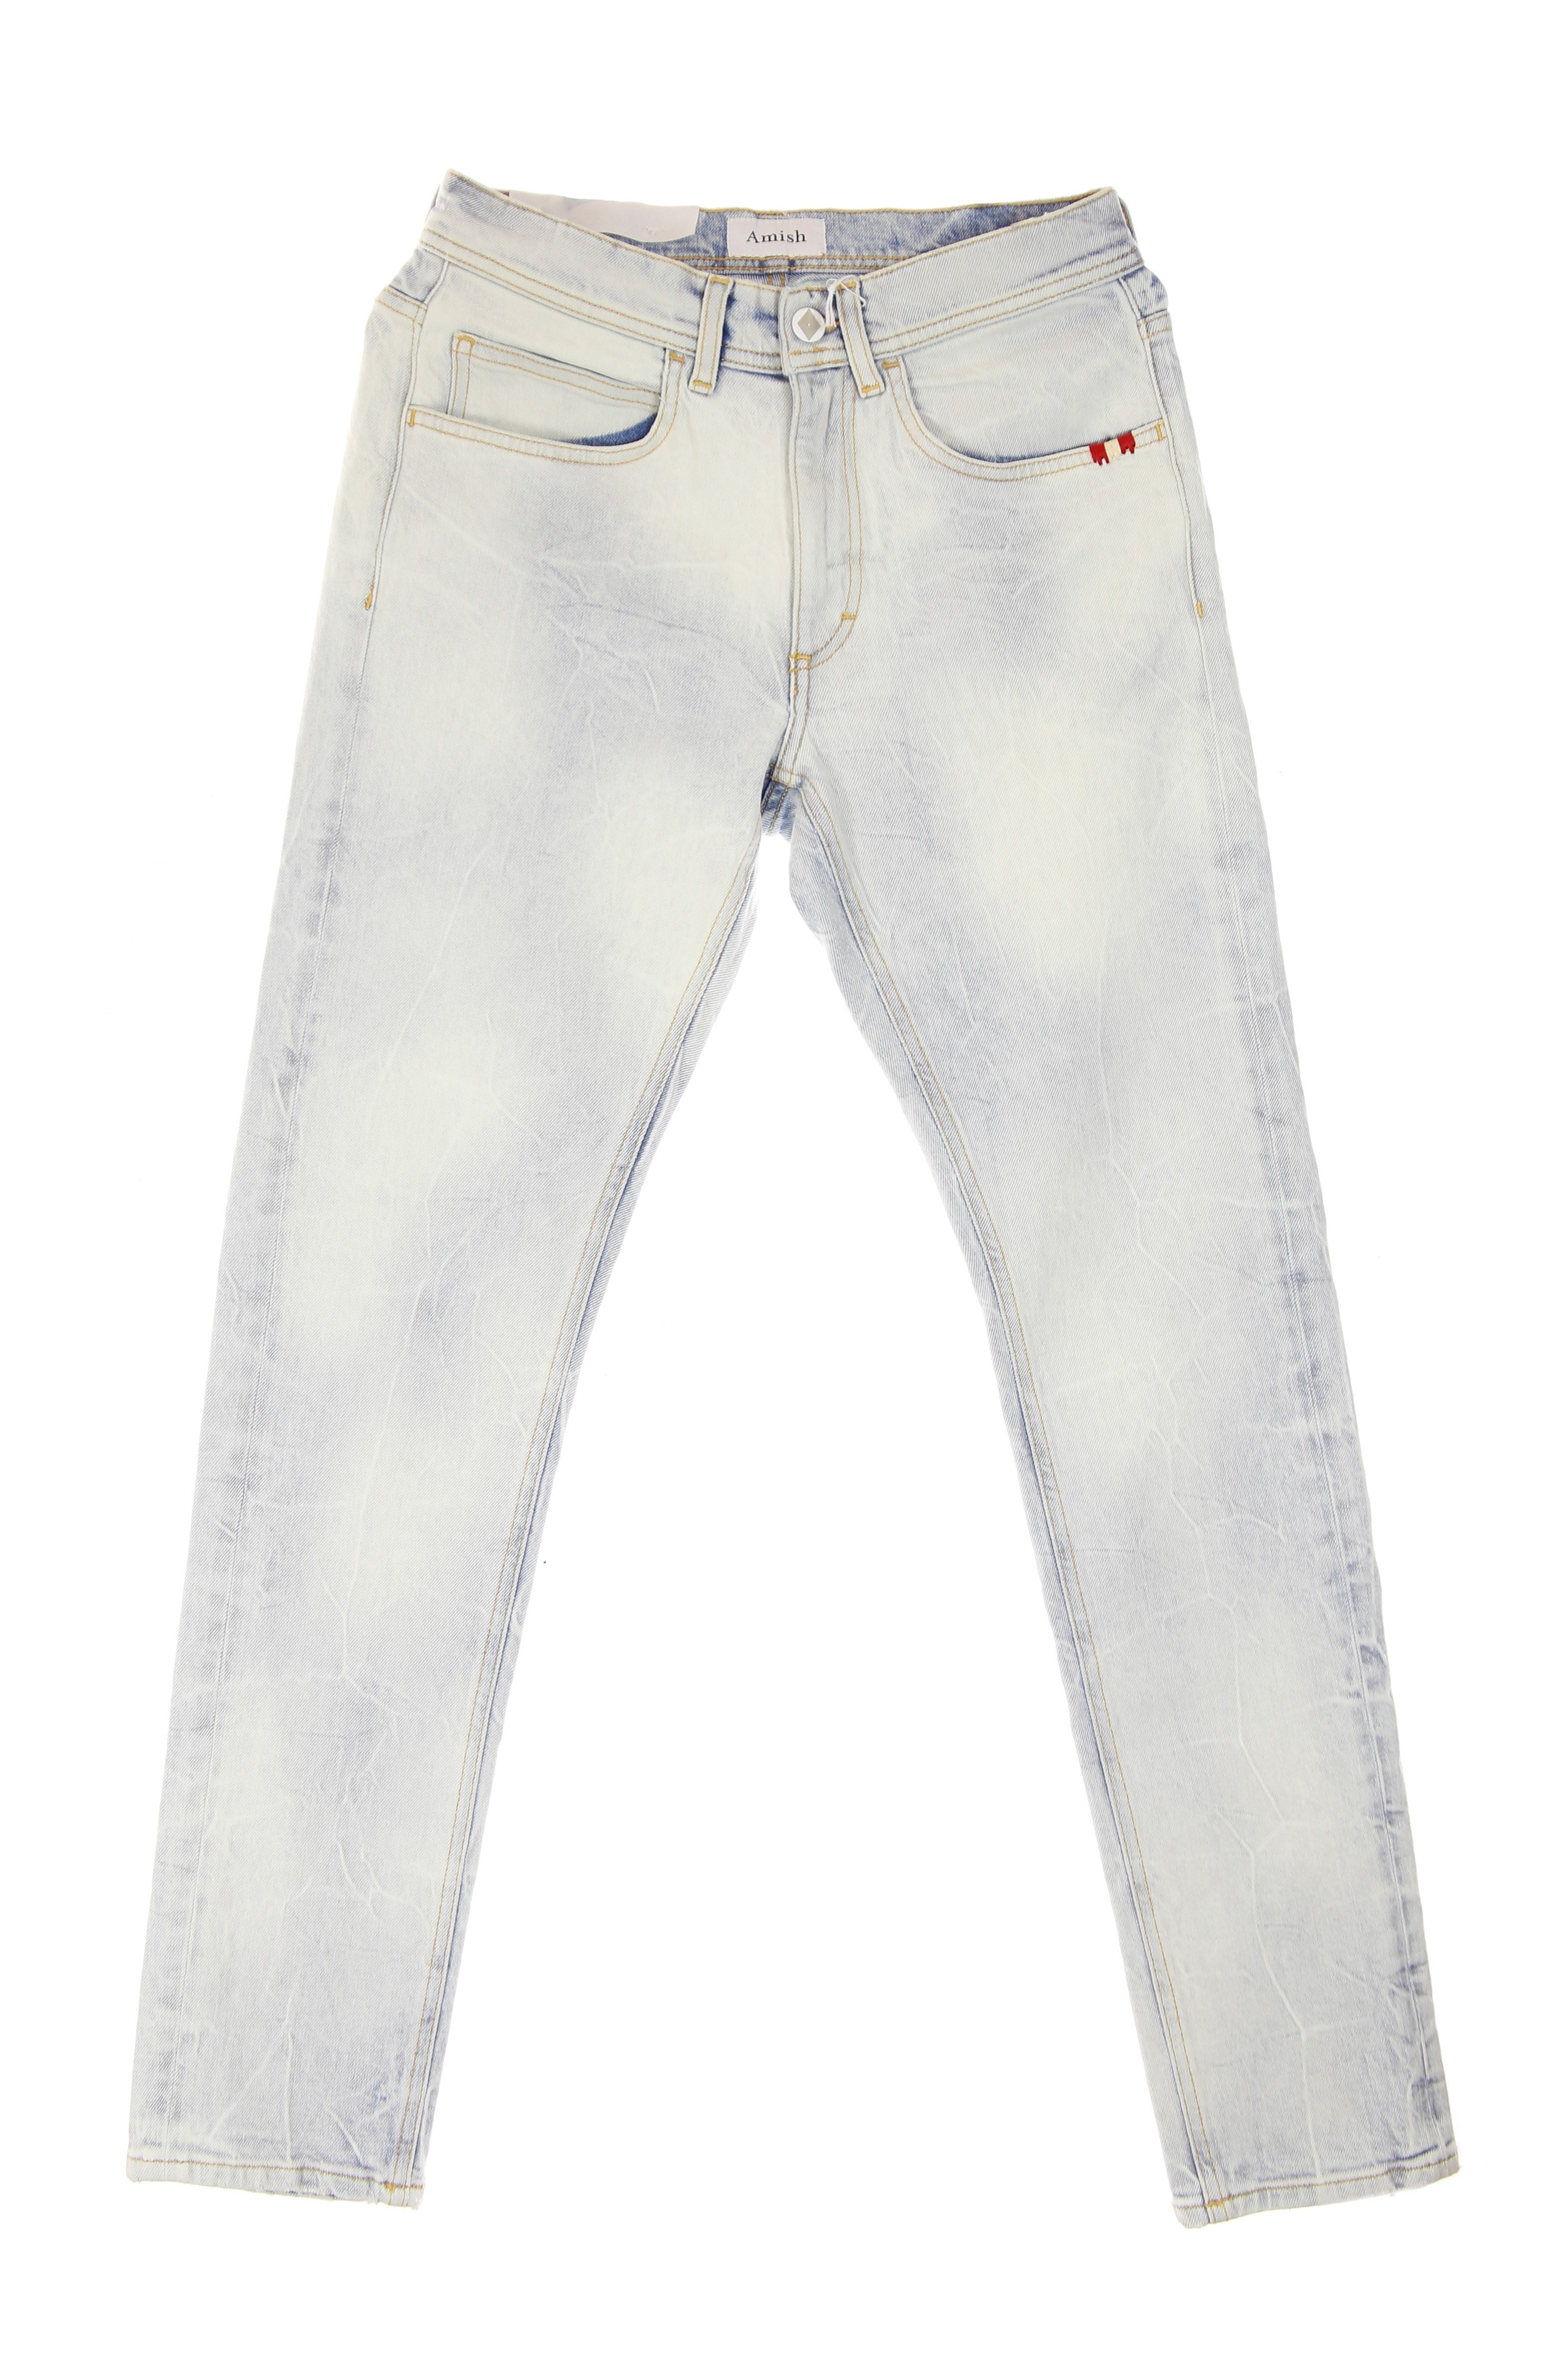 David Comfort Men's Jeans Crinkle Bleach